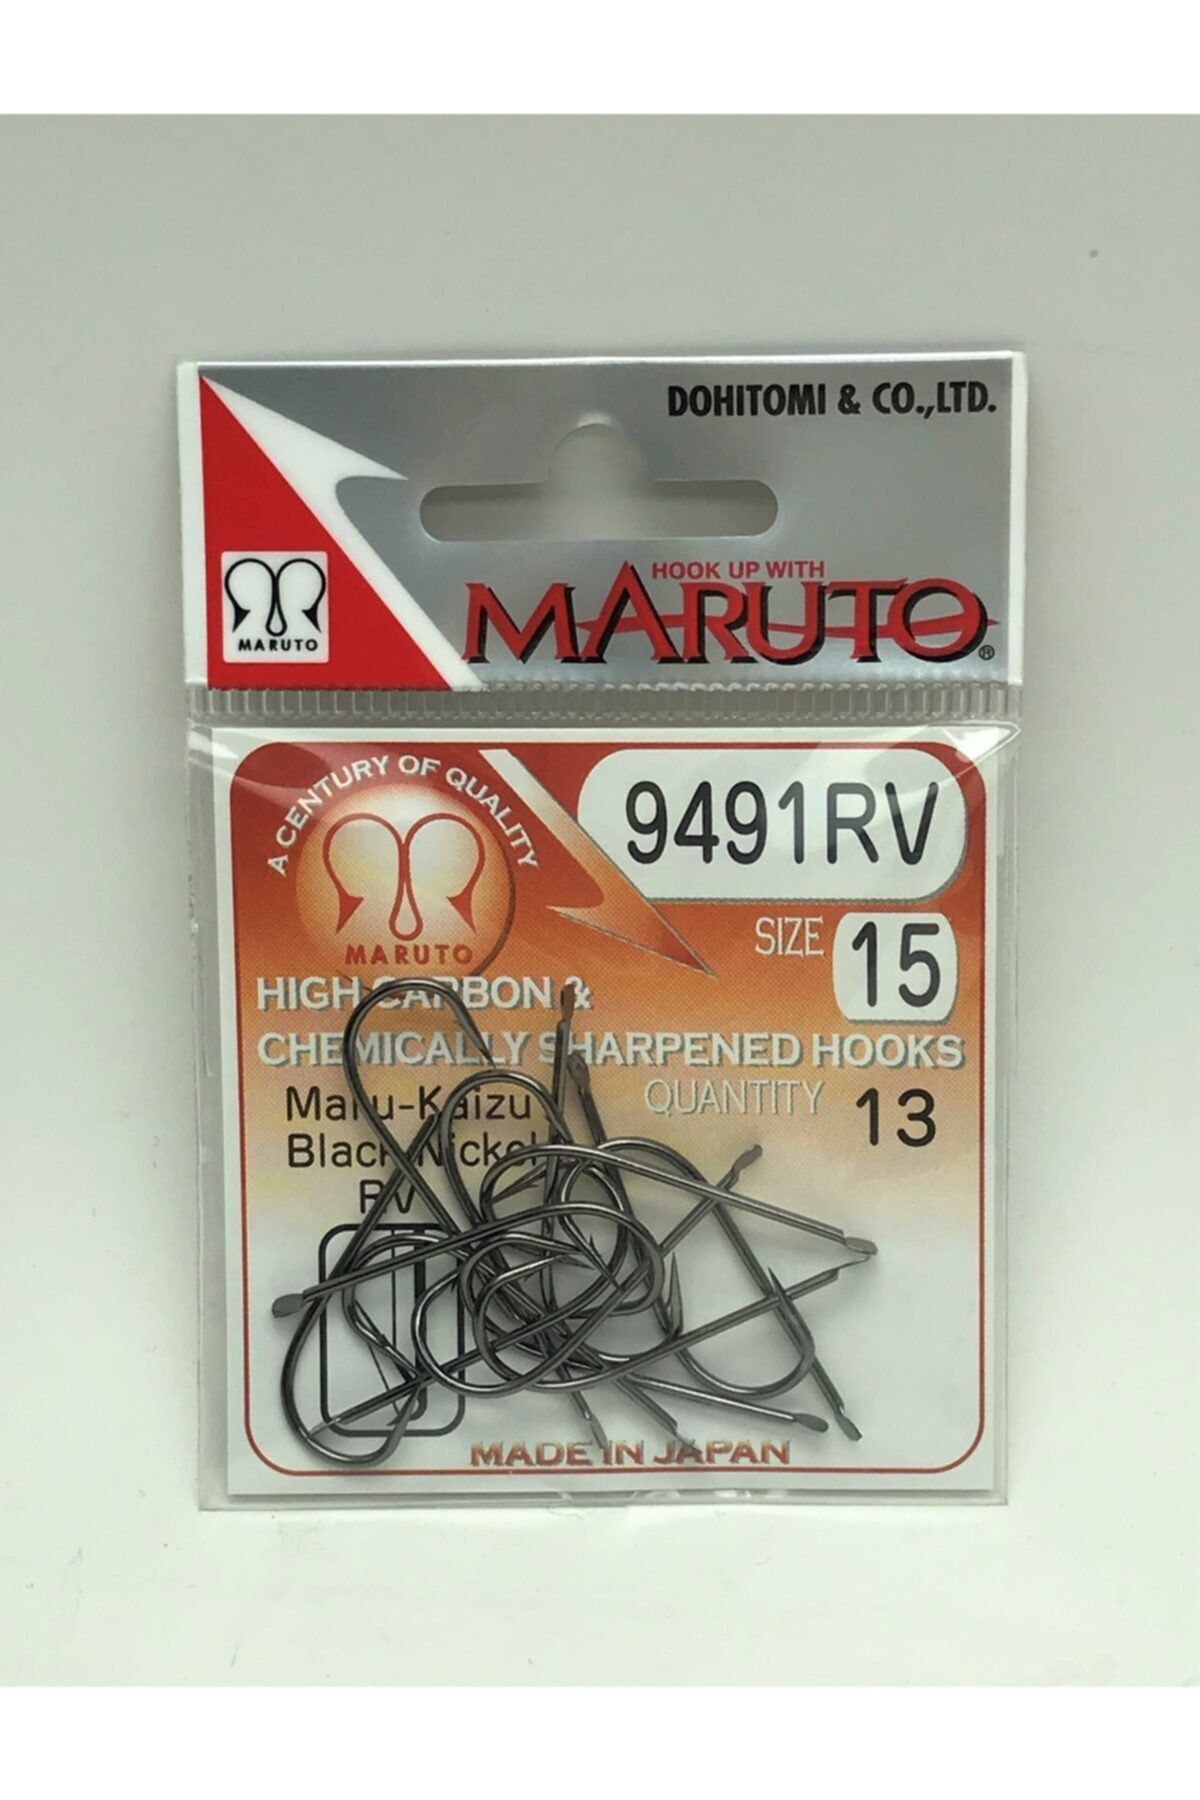 Maruto 9491 Rv 15 Numara Iğne